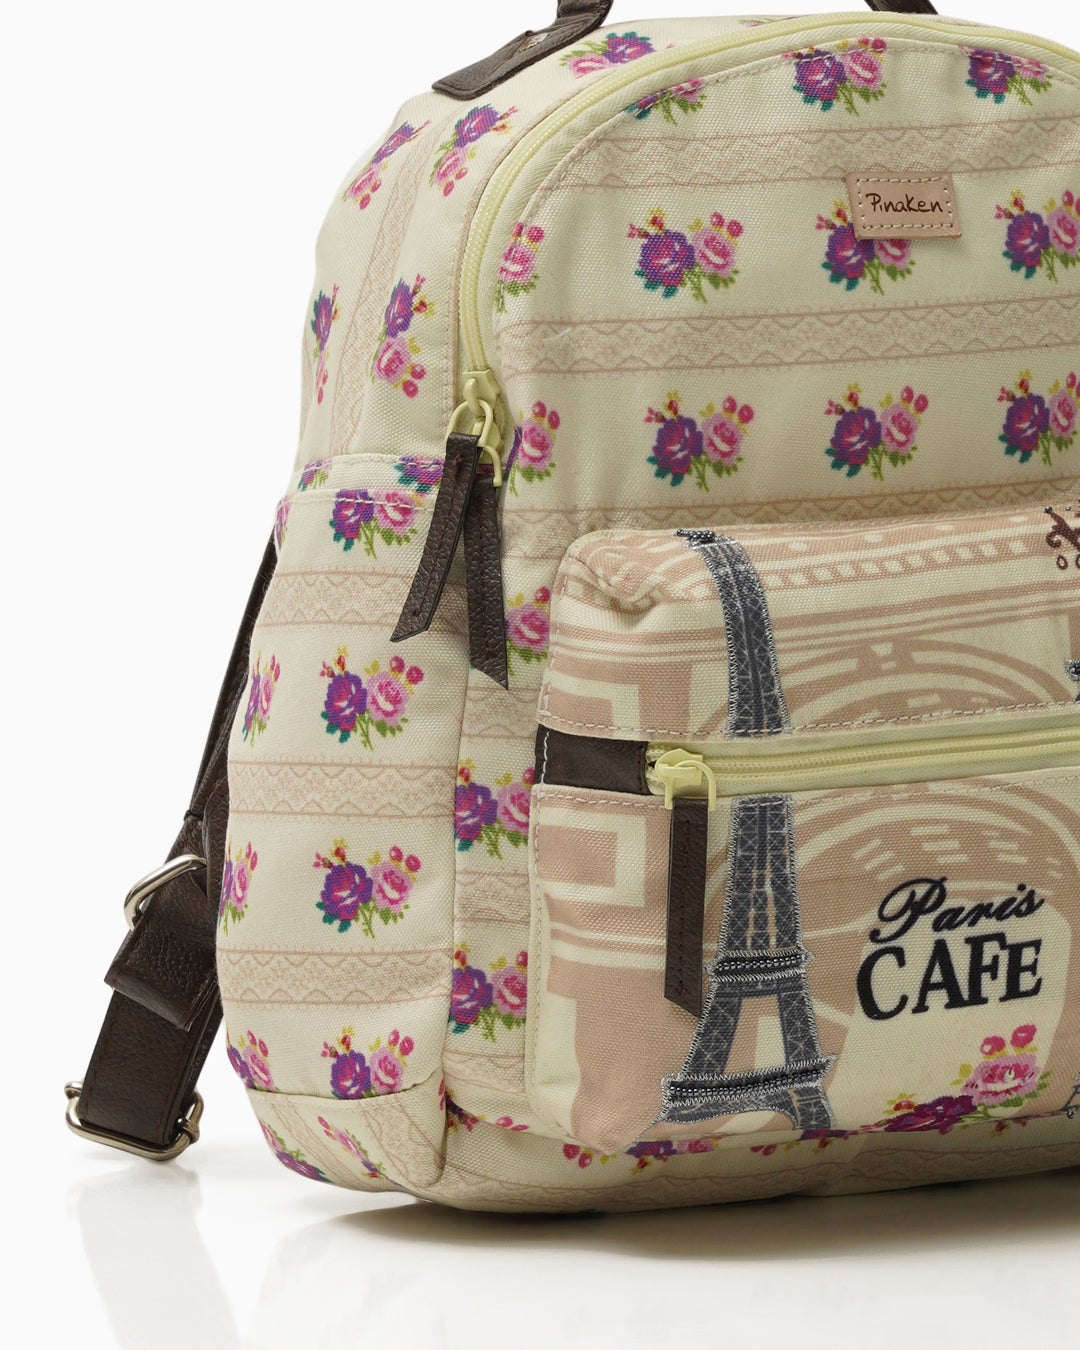 Paris Café Backpack with Side Pockets